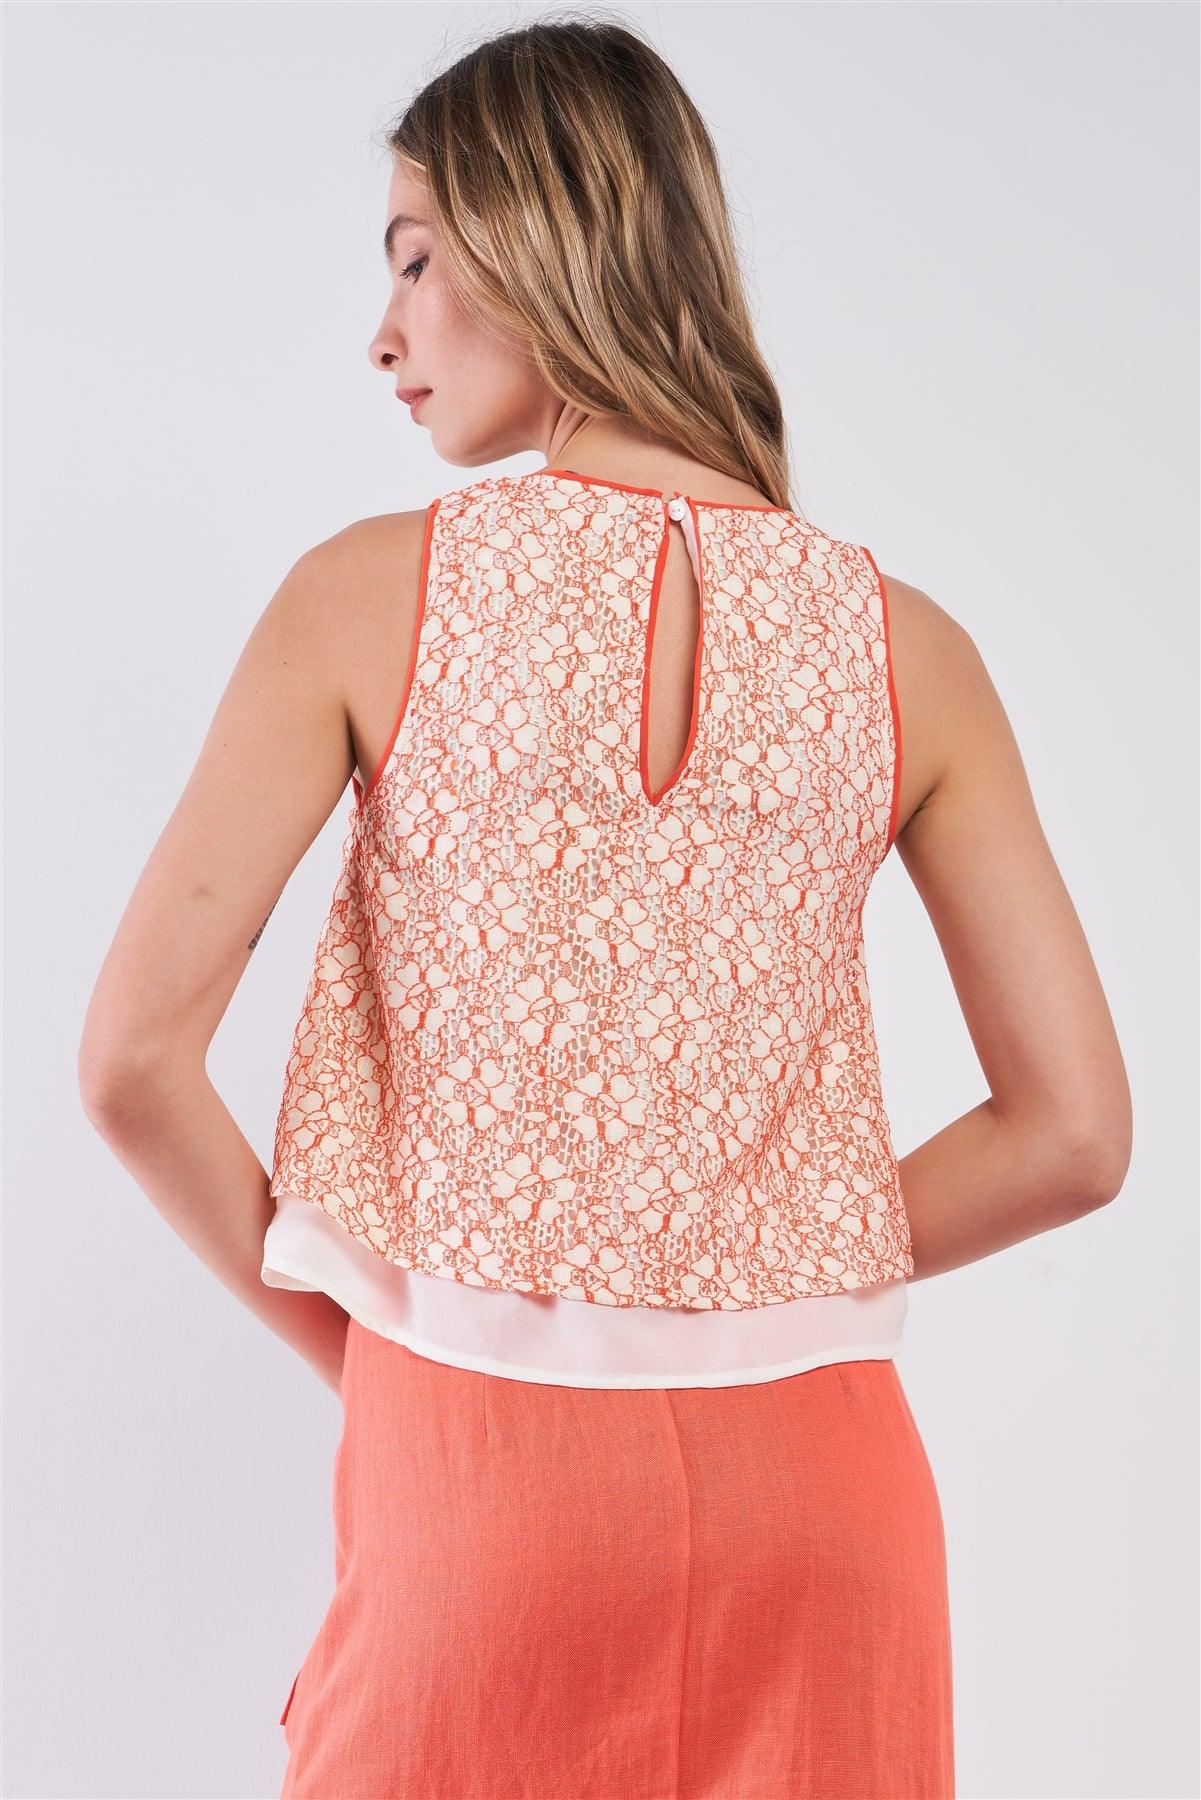 Sunny Apricot Orange Sleeveless Floral Crochet Layered Round Neck Flare Top /1-2-3-1